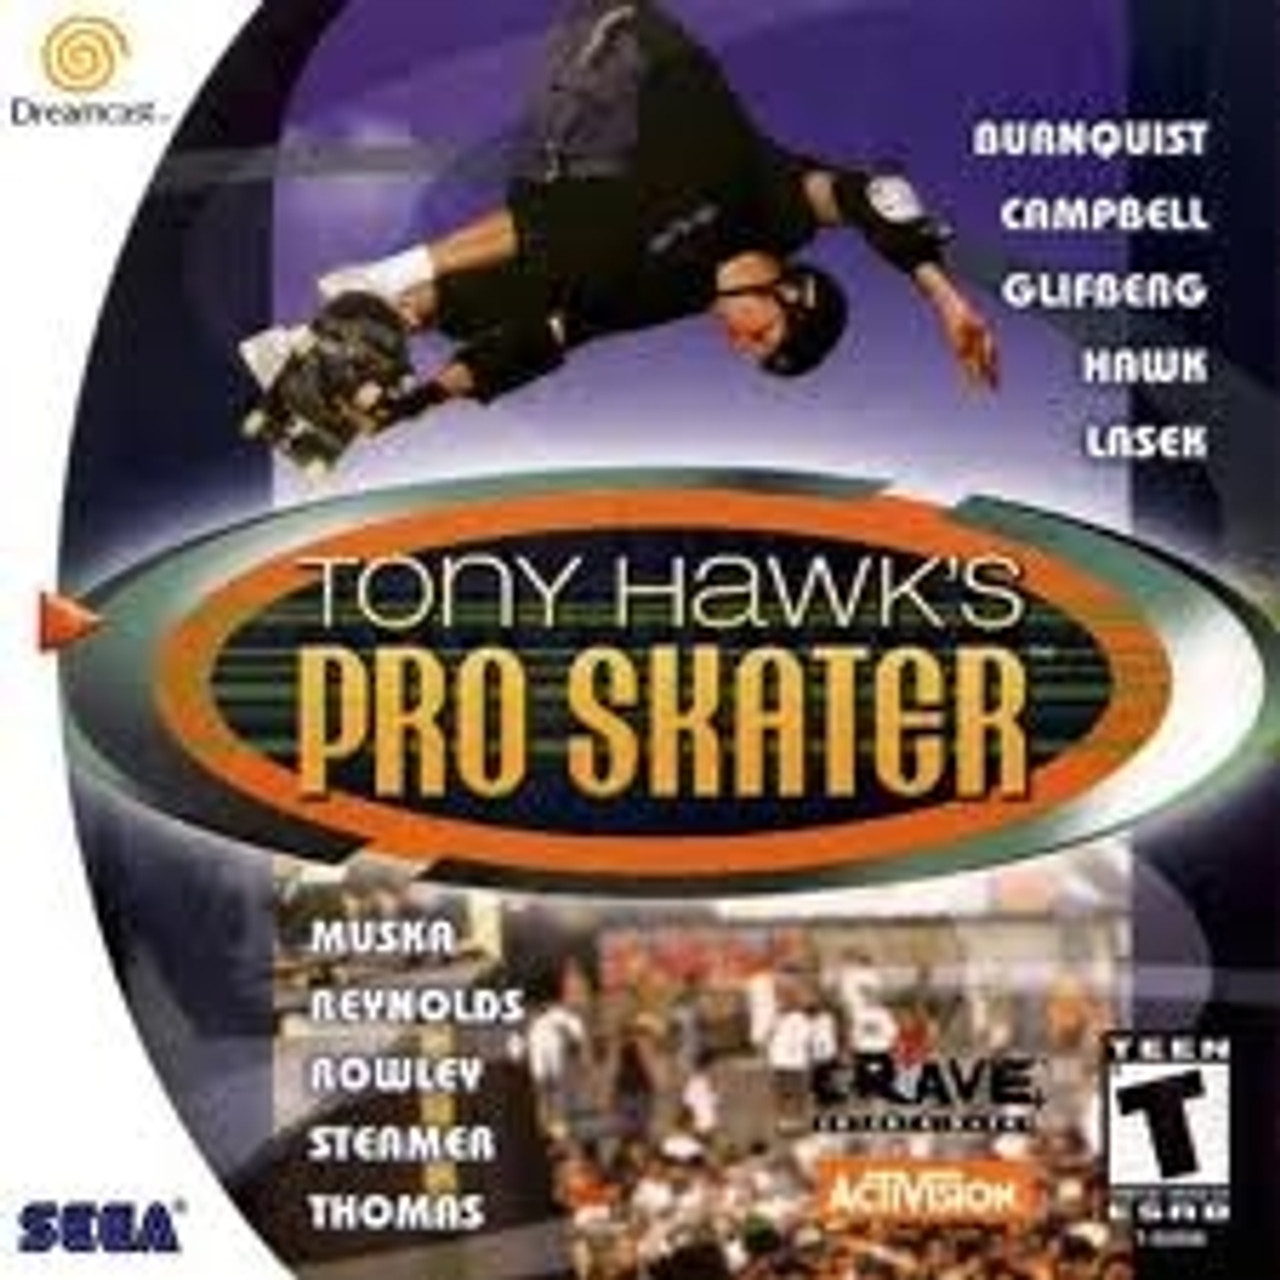 Here's A Great Tony Hawk's Pro Skater 1 & 2 Bargain